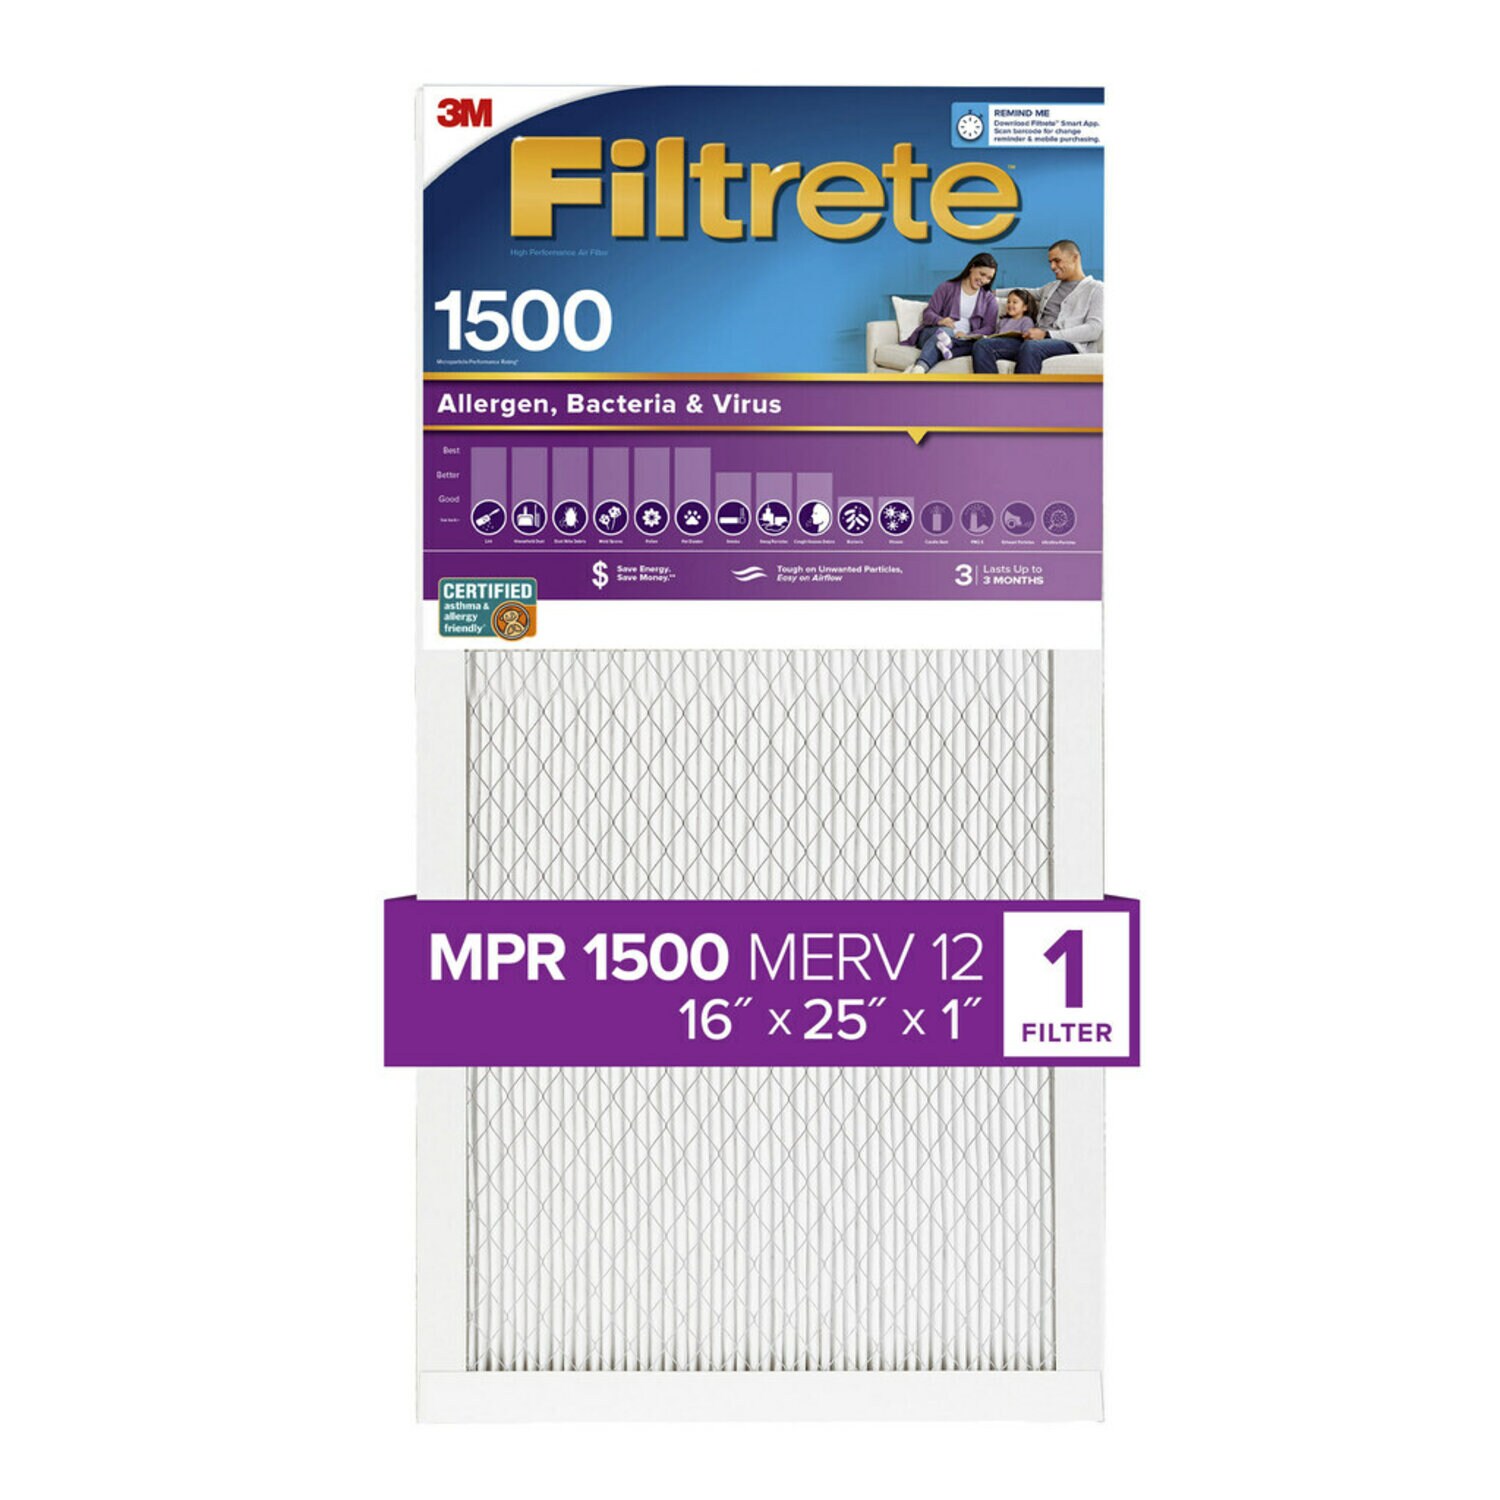 7100203213 - Filtrete Allergen, Bacteria & Virus Air Filter, 1500 MPR, 2001-4-HR, 16
in x 25 in x 1 in (40,6 cm x 63,5 cm x 2,5 cm)